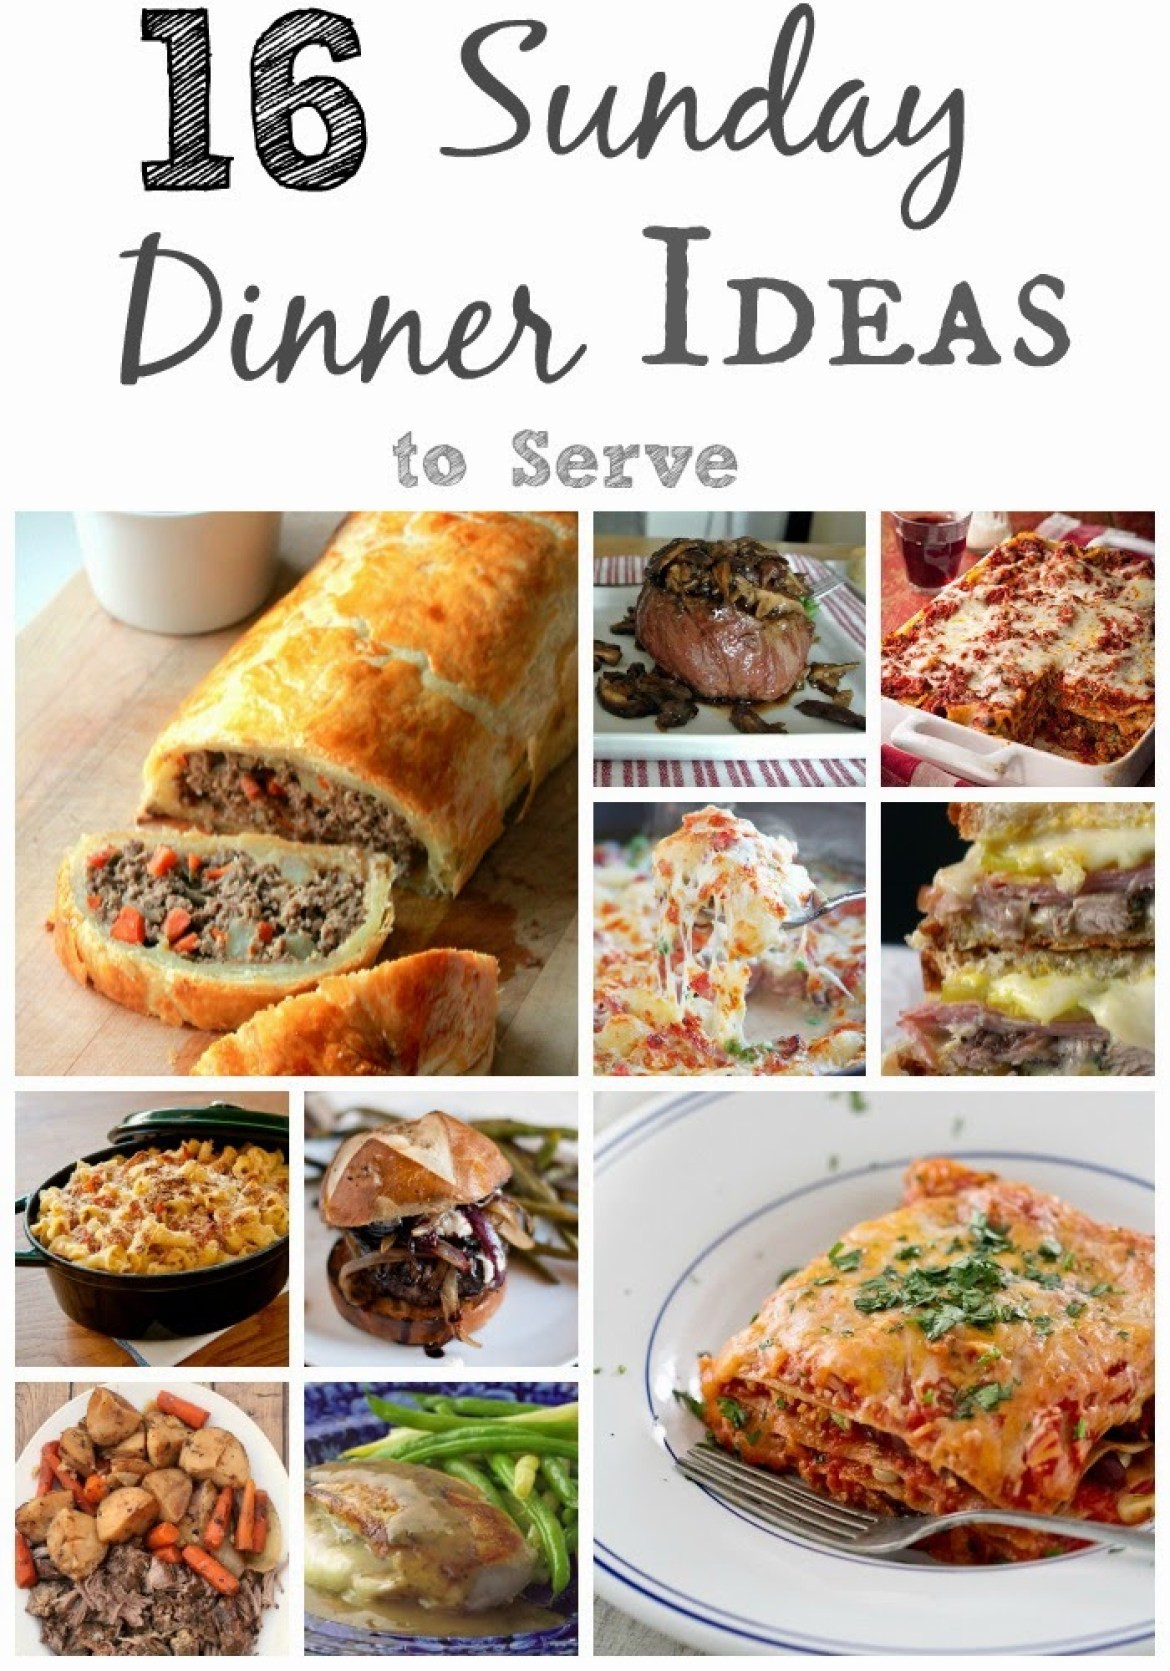 Valentine'S Dinner Ideas For Family
 16 Sunday Dinner Ideas to Serve Melissa Kaylene